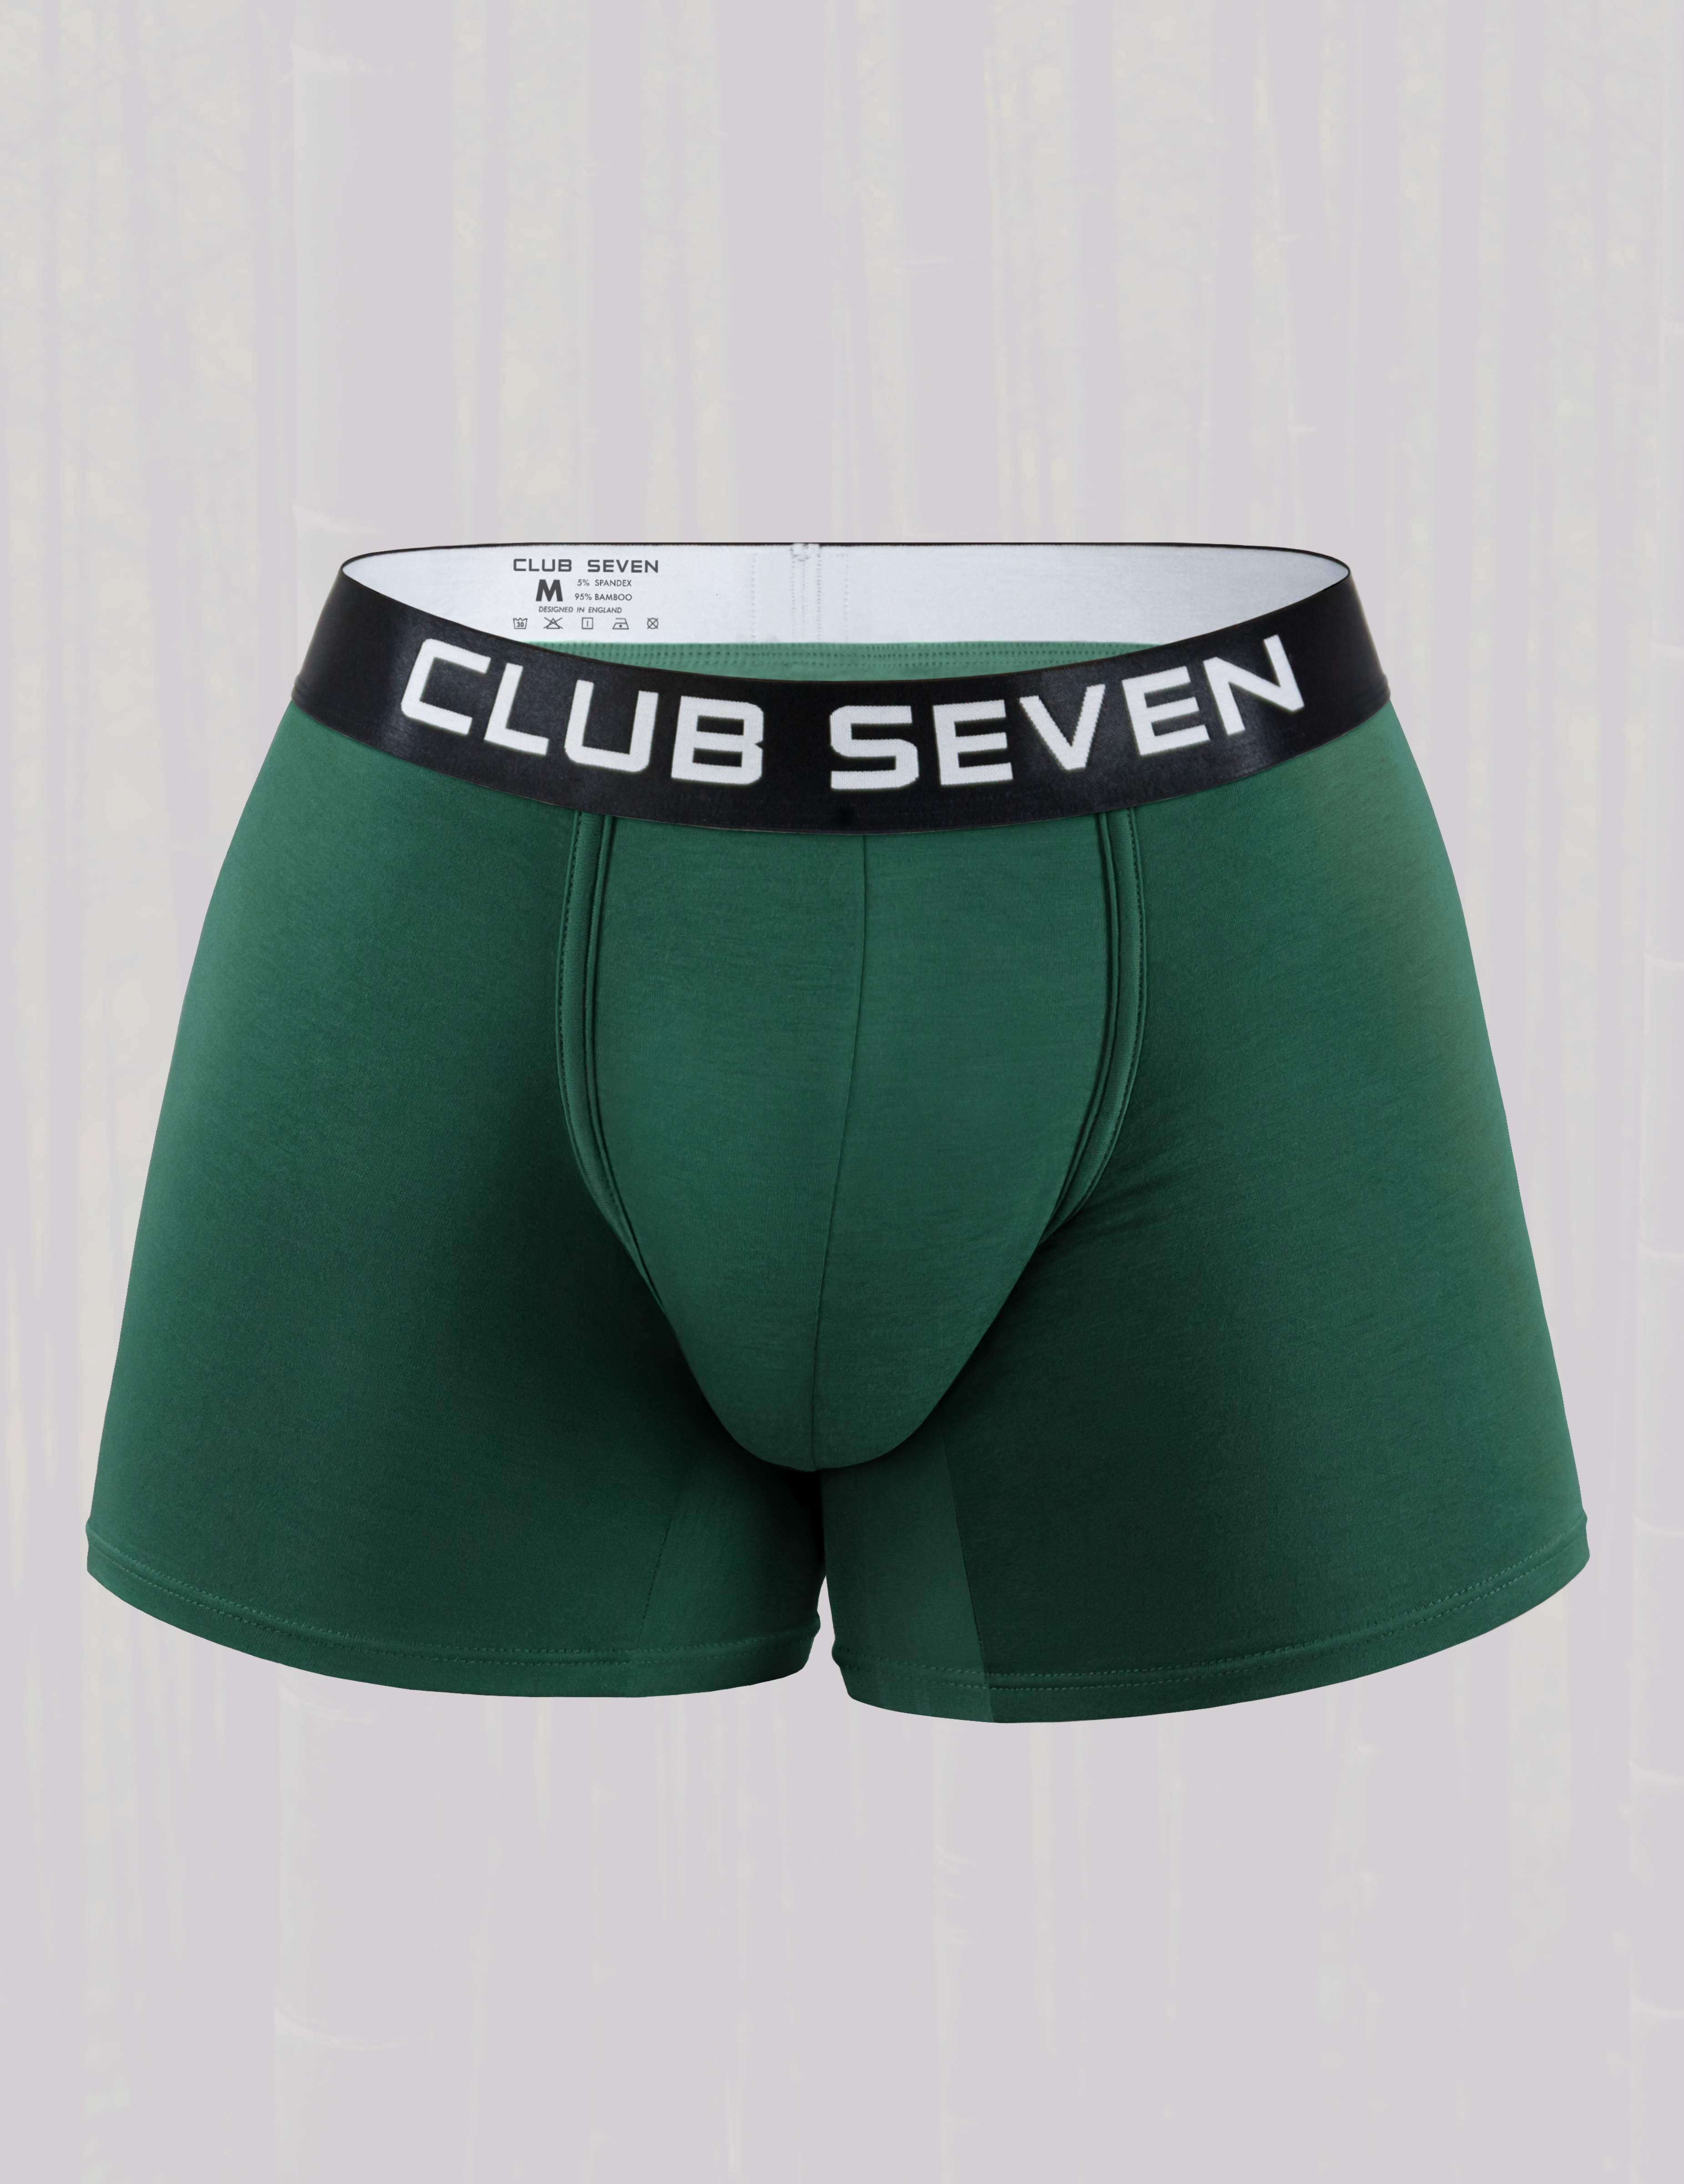 SLIP BELGE, Men's underwear custom made with premium European fabrics